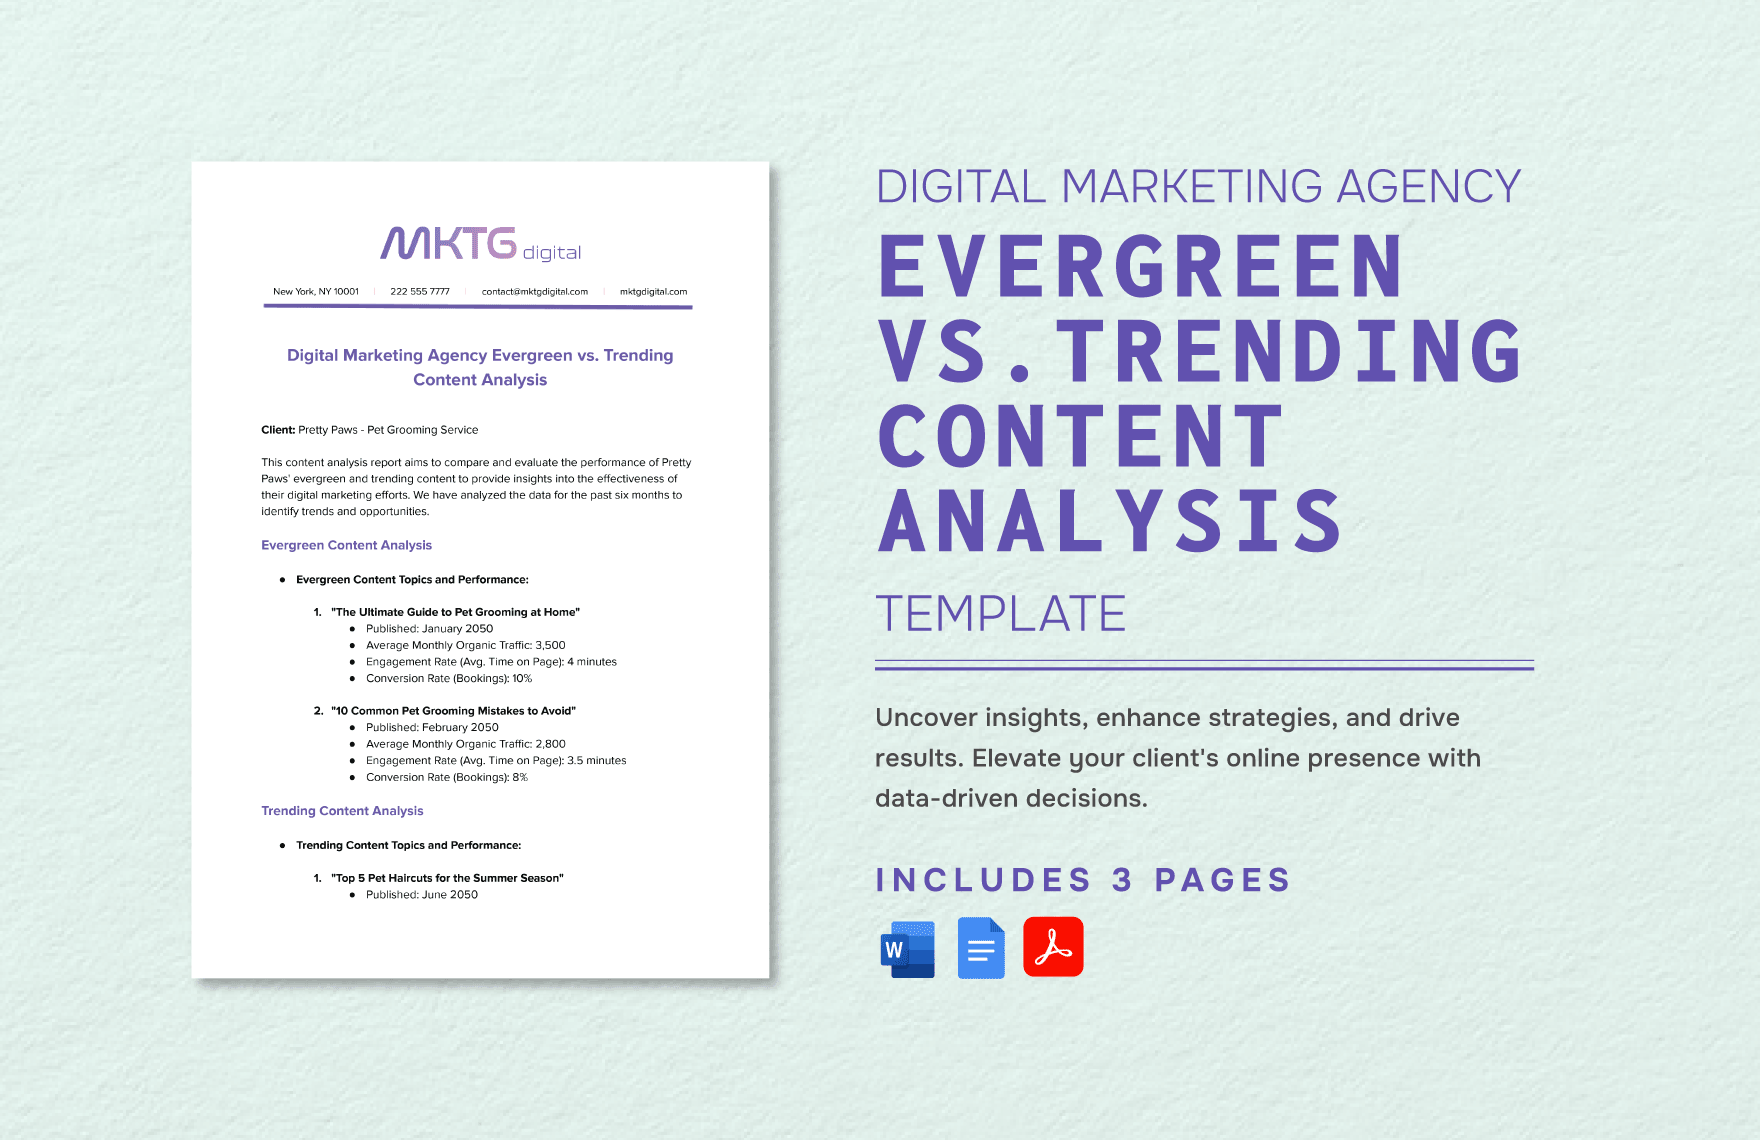 Digital Marketing Agency Evergreen vs. Trending Content Analysis Template